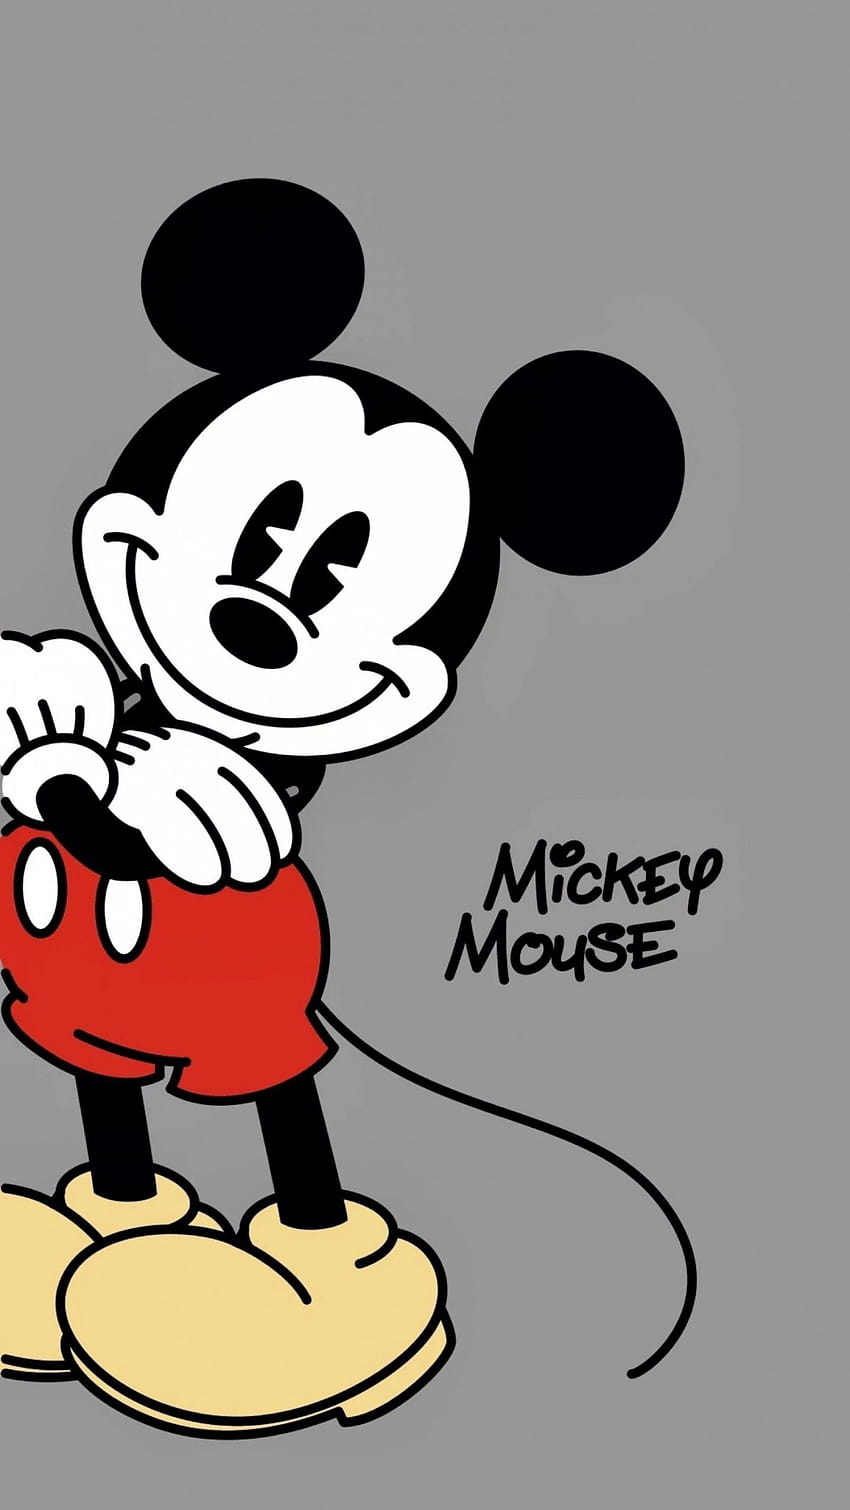 Cómo organicé con éxito mi propio Mickey Mouse, genial Mickey Mouse fondo de pantalla del teléfono